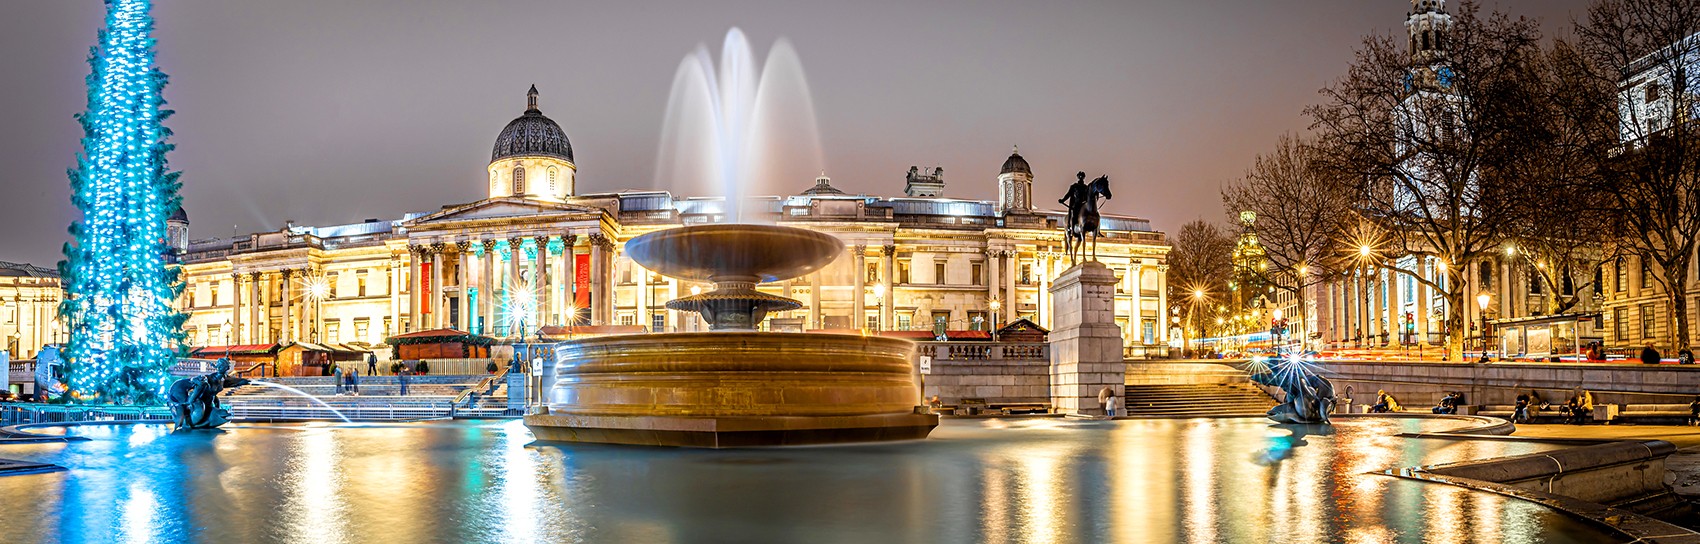 Trafalgar Square, London. Photograph by ALEXEY FEDORENKO